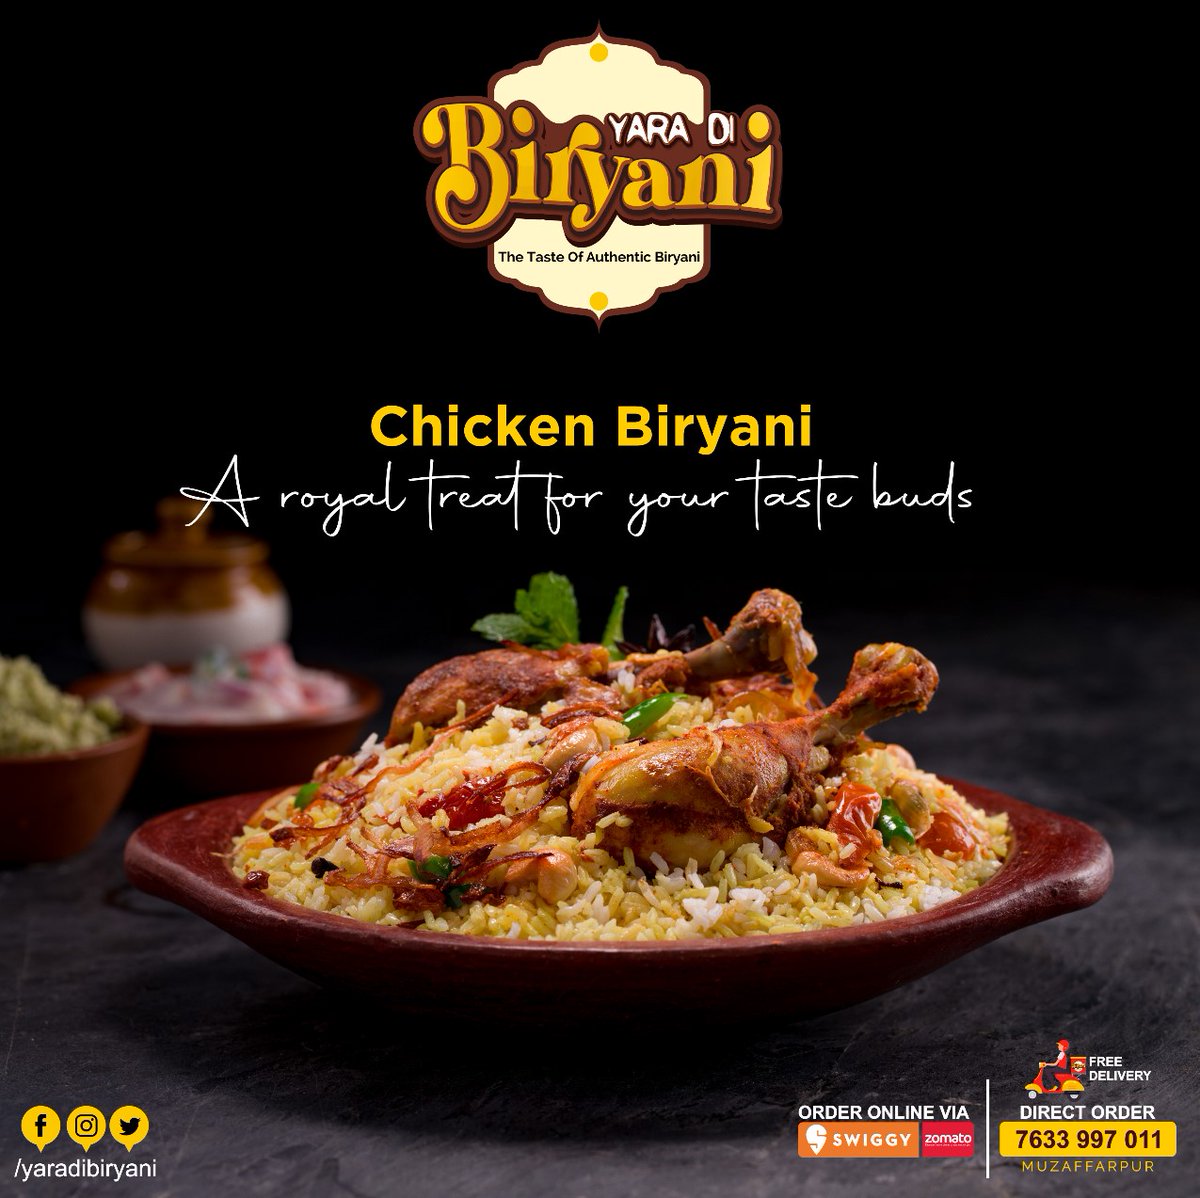 Chicken Biryani..
A royal treat for your taste buds..
.
.
#ydb #yaradibiryani #yaradibiryanimuzaffarpur #yaradibiryanikitchen #ydbcloudkitchen #guestway #guestwayfoodandhospitality #food #biryani #chickenbiryani #indiancusine